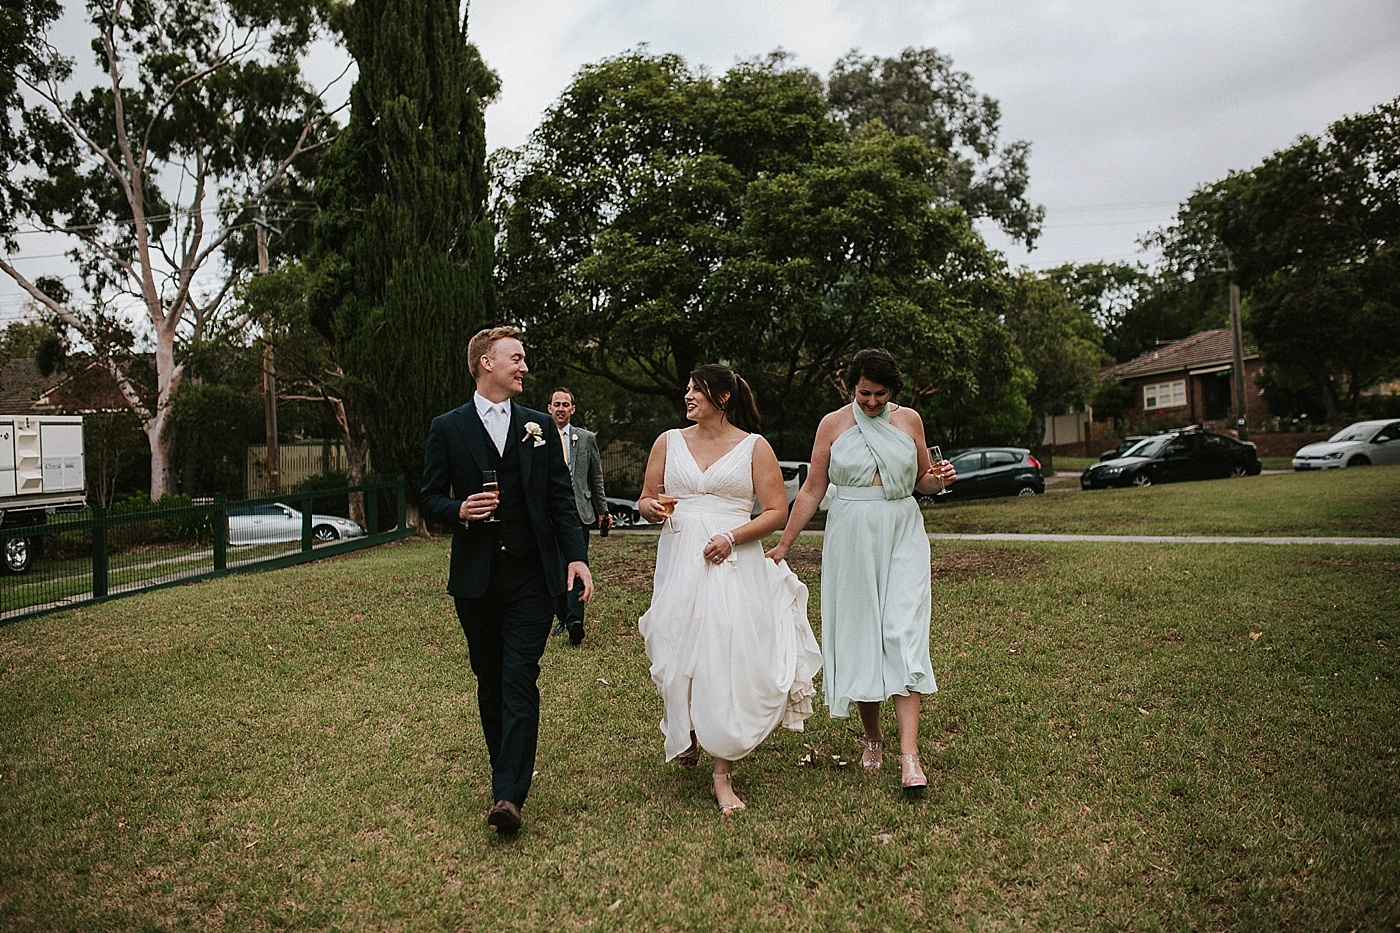 Brooke&David_Melbourne-Quirky-Relaxed-Fun-Casual-Backyard-Wedding_Melbourne-Wedding-Photography-59